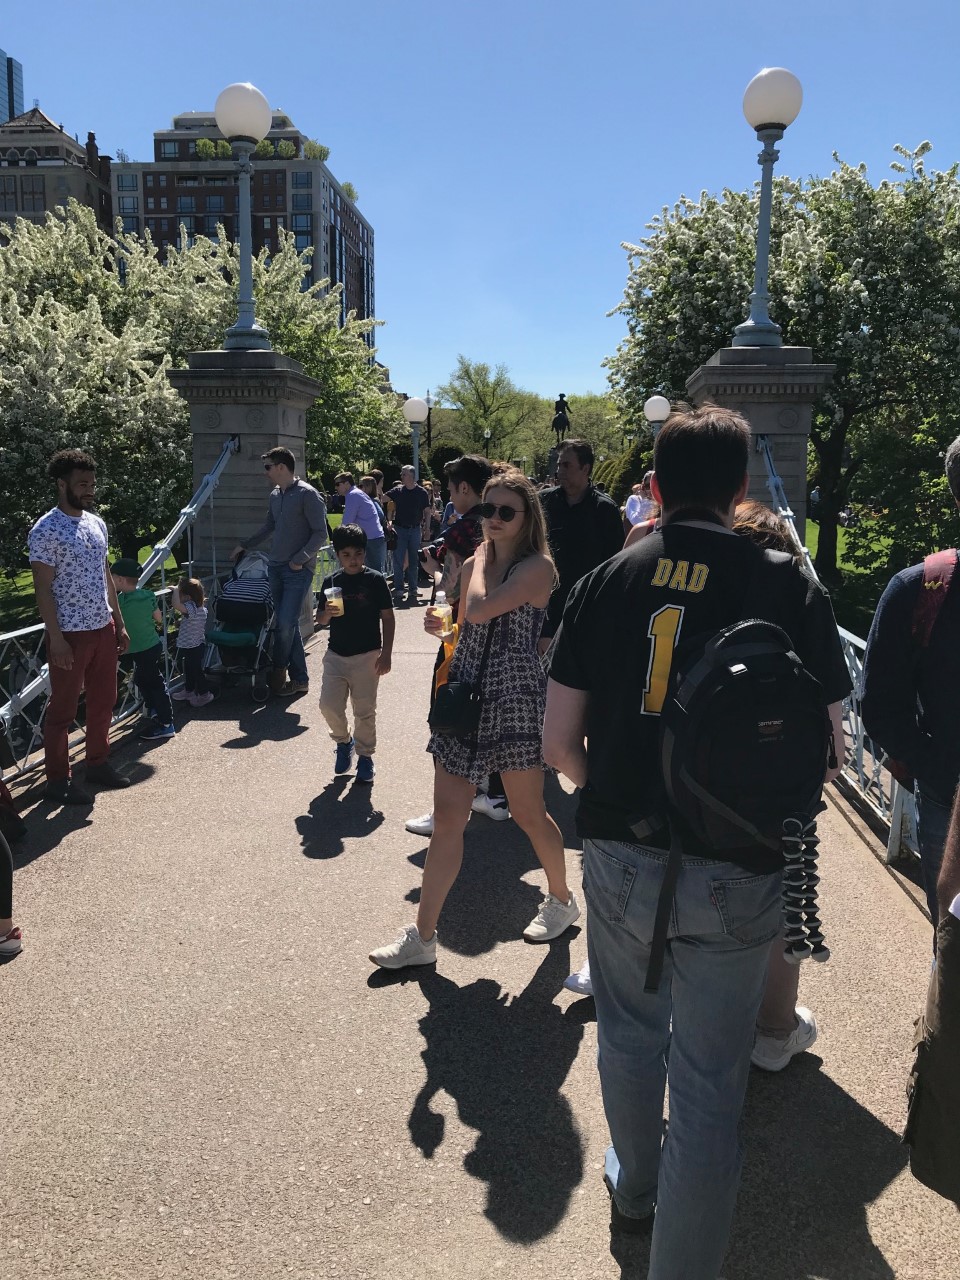 crowds in boston summer public garden bridge II.jpg